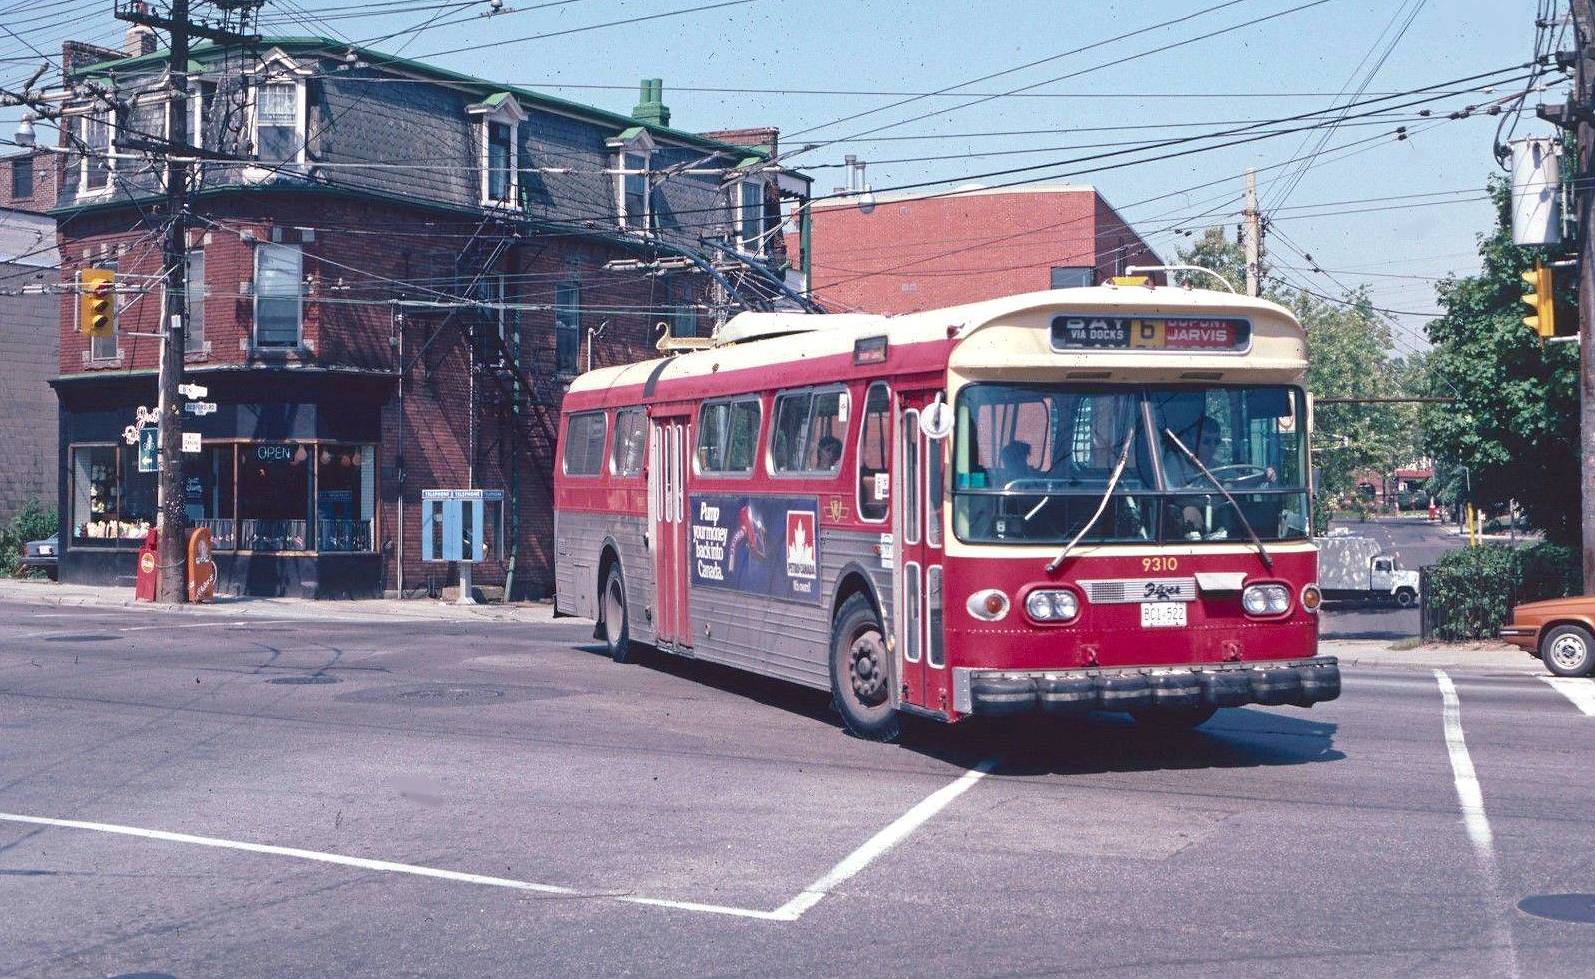 aa photo - toronto - bedford road and davenport - ttc trolley bus turning corner - 1983